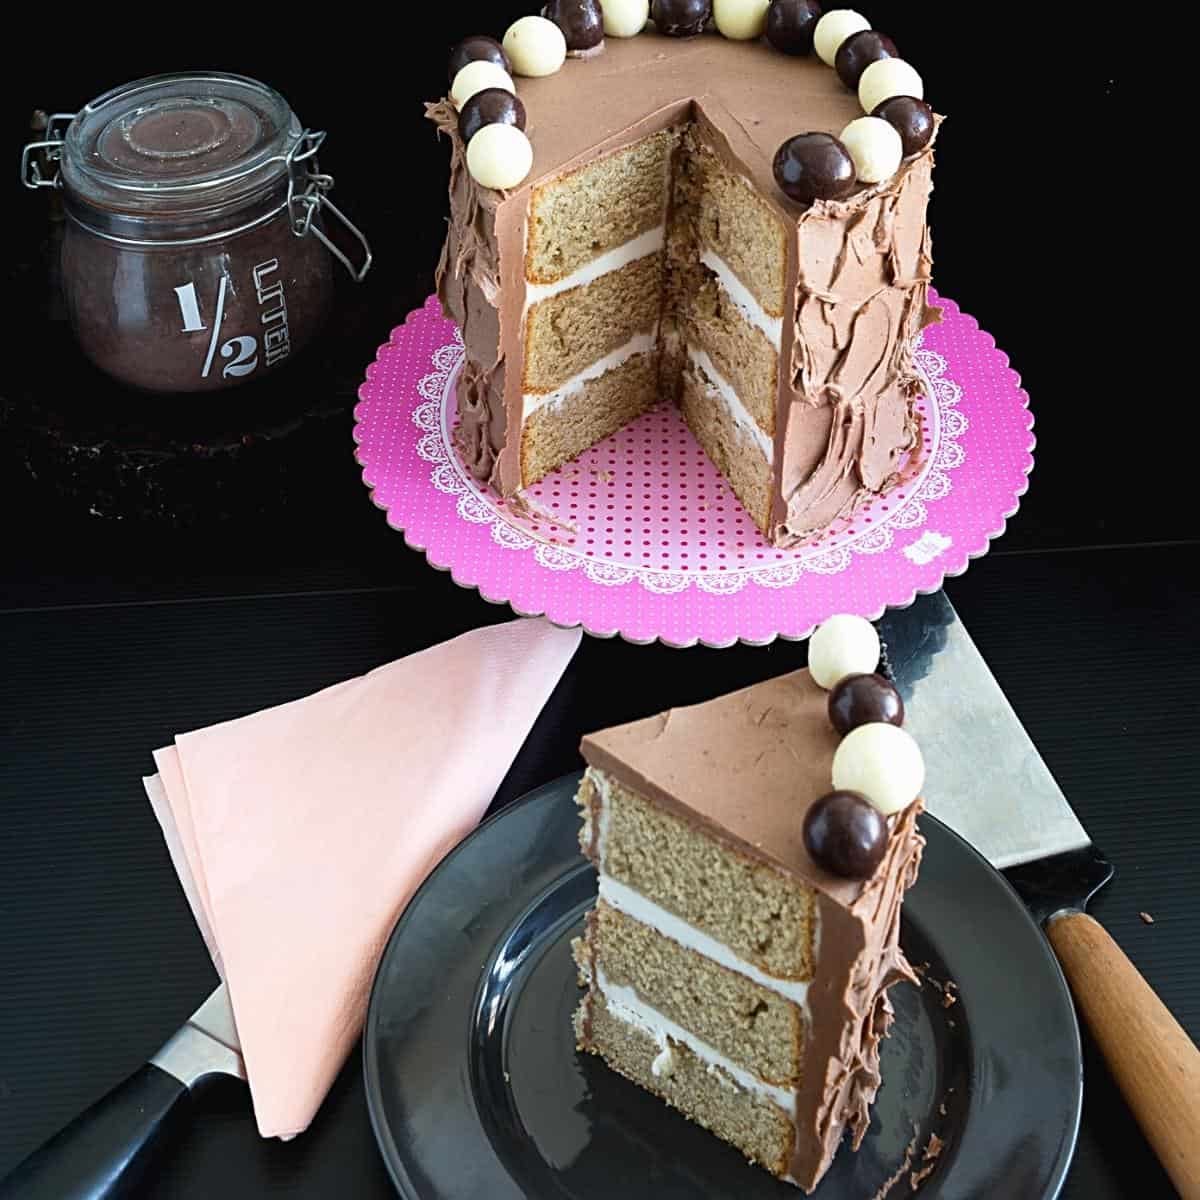 A sliced layer cake.